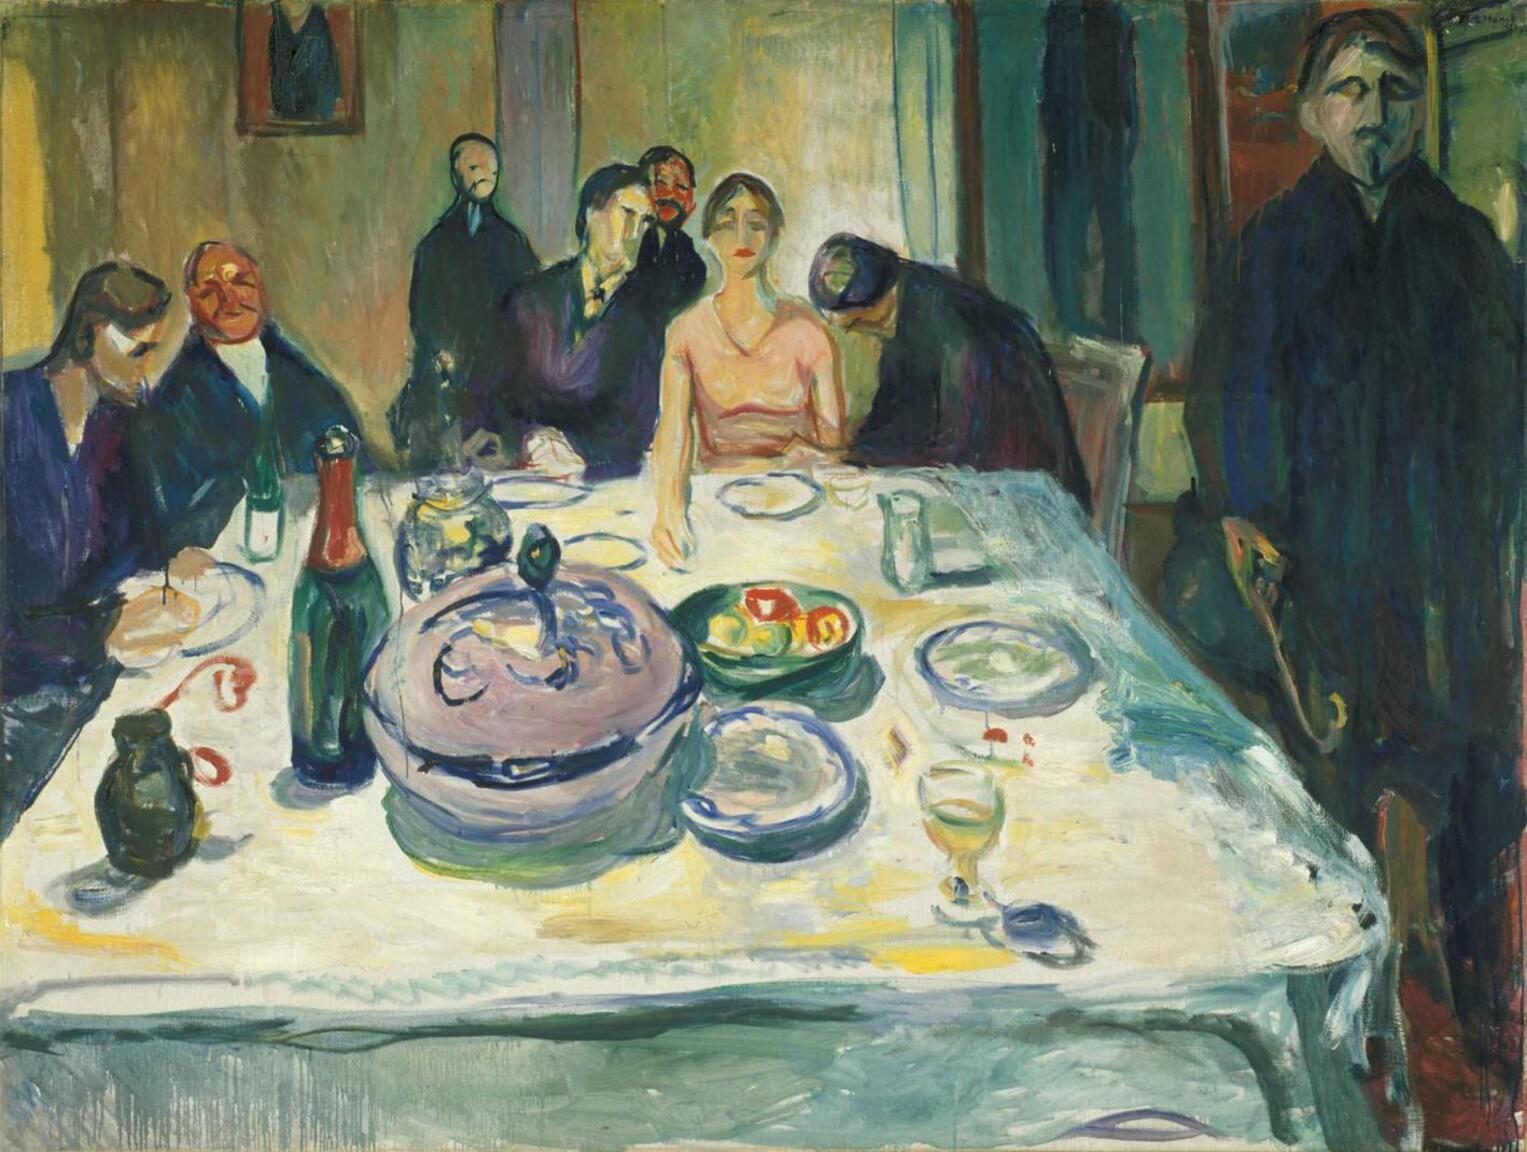 Edvard Munch: The Wedding of the Bohemian, 1925-26. © Munchmuseet